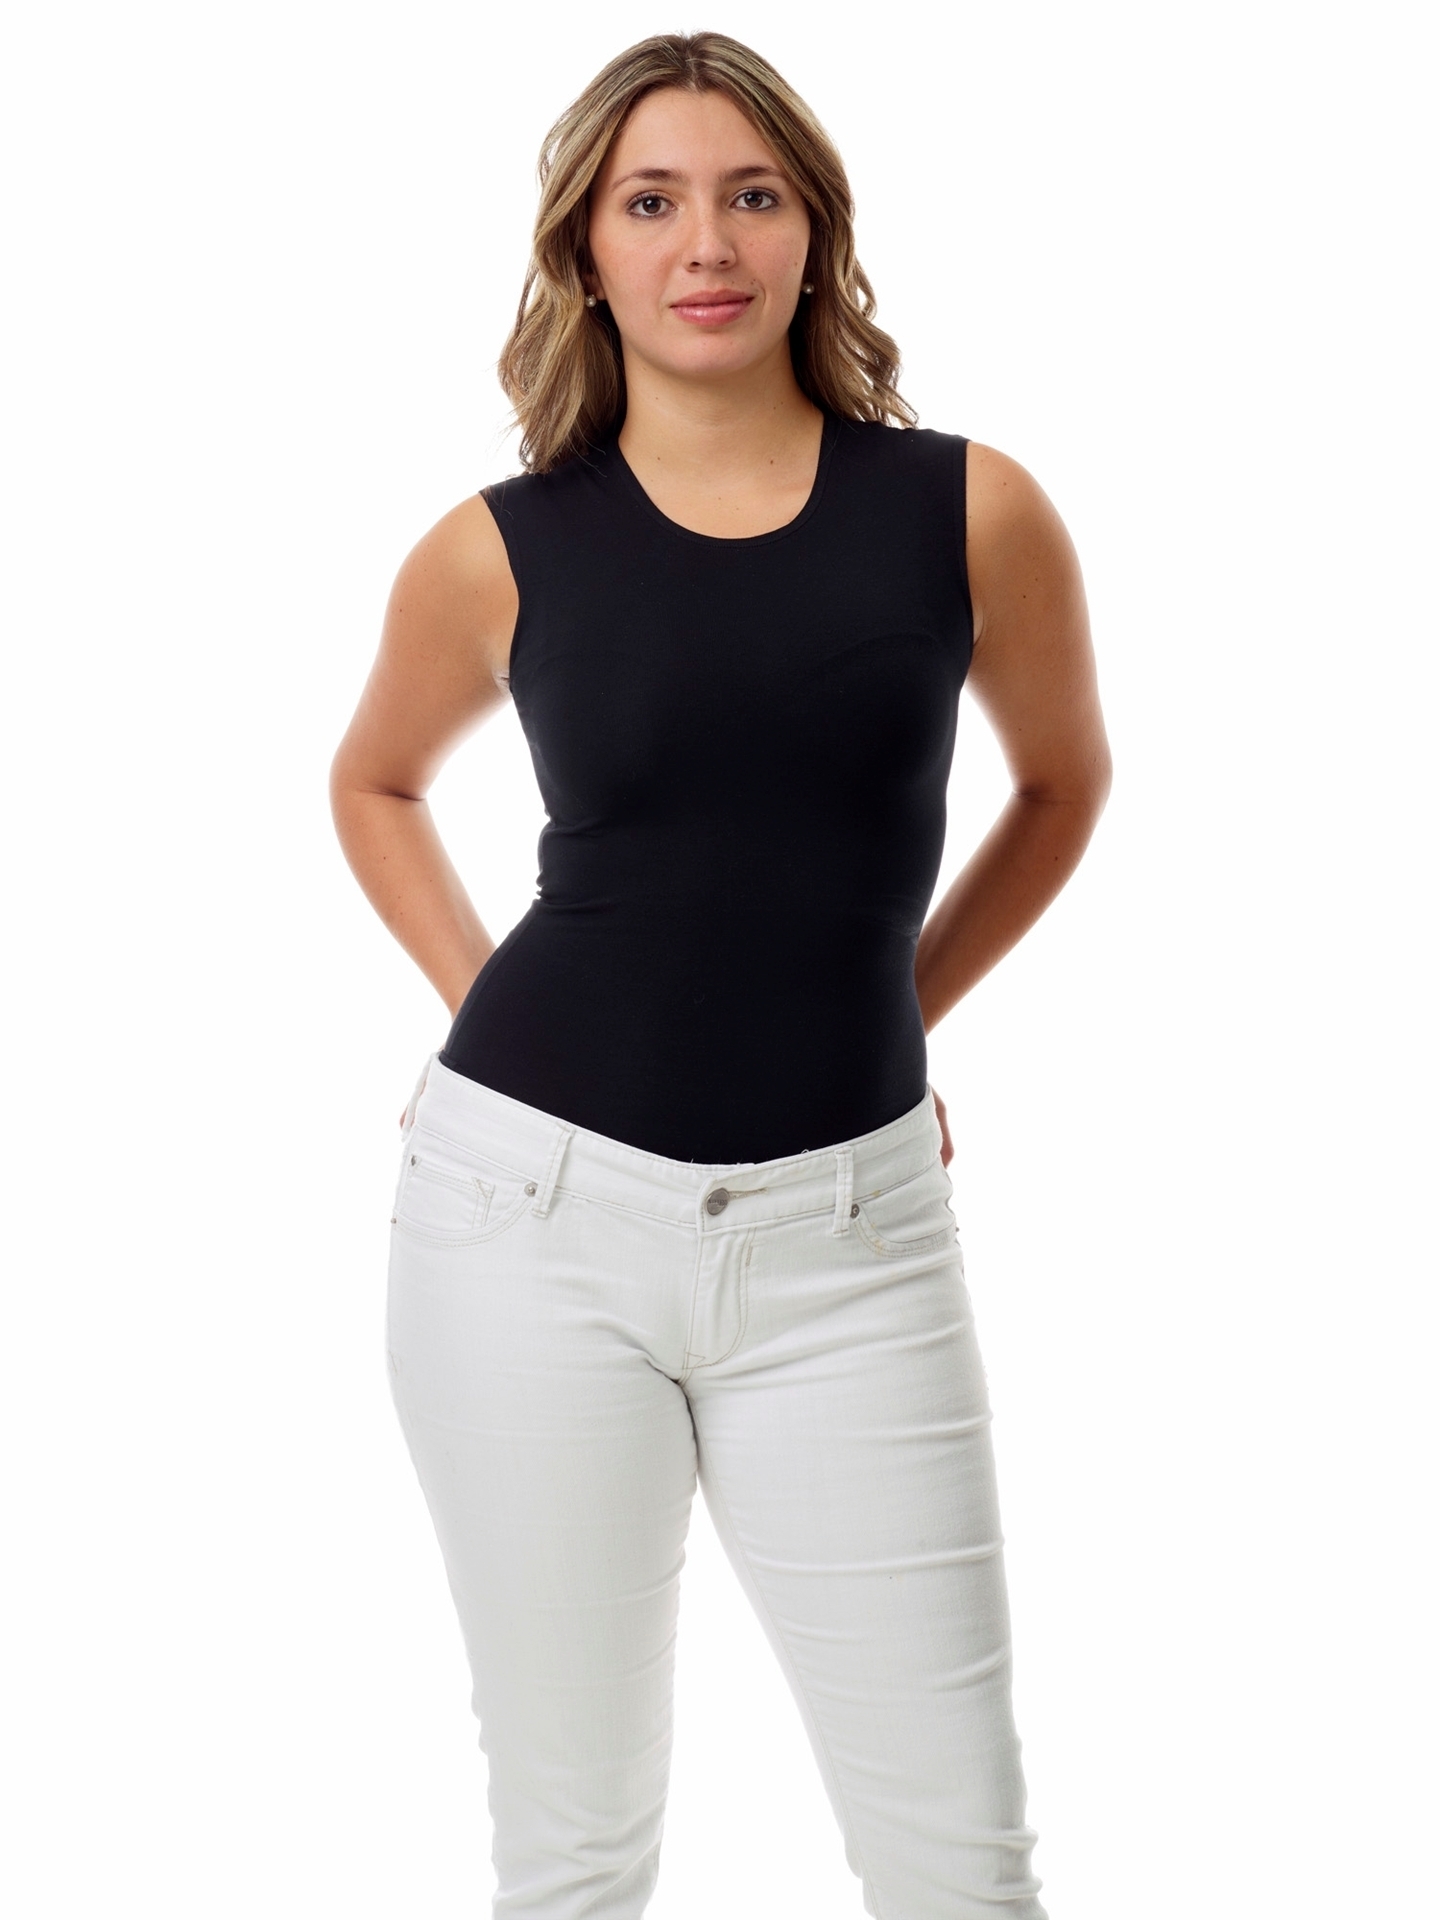 Underworks Cotton Spandex Ultra Light Compression Muscle Shirt - Black - XS